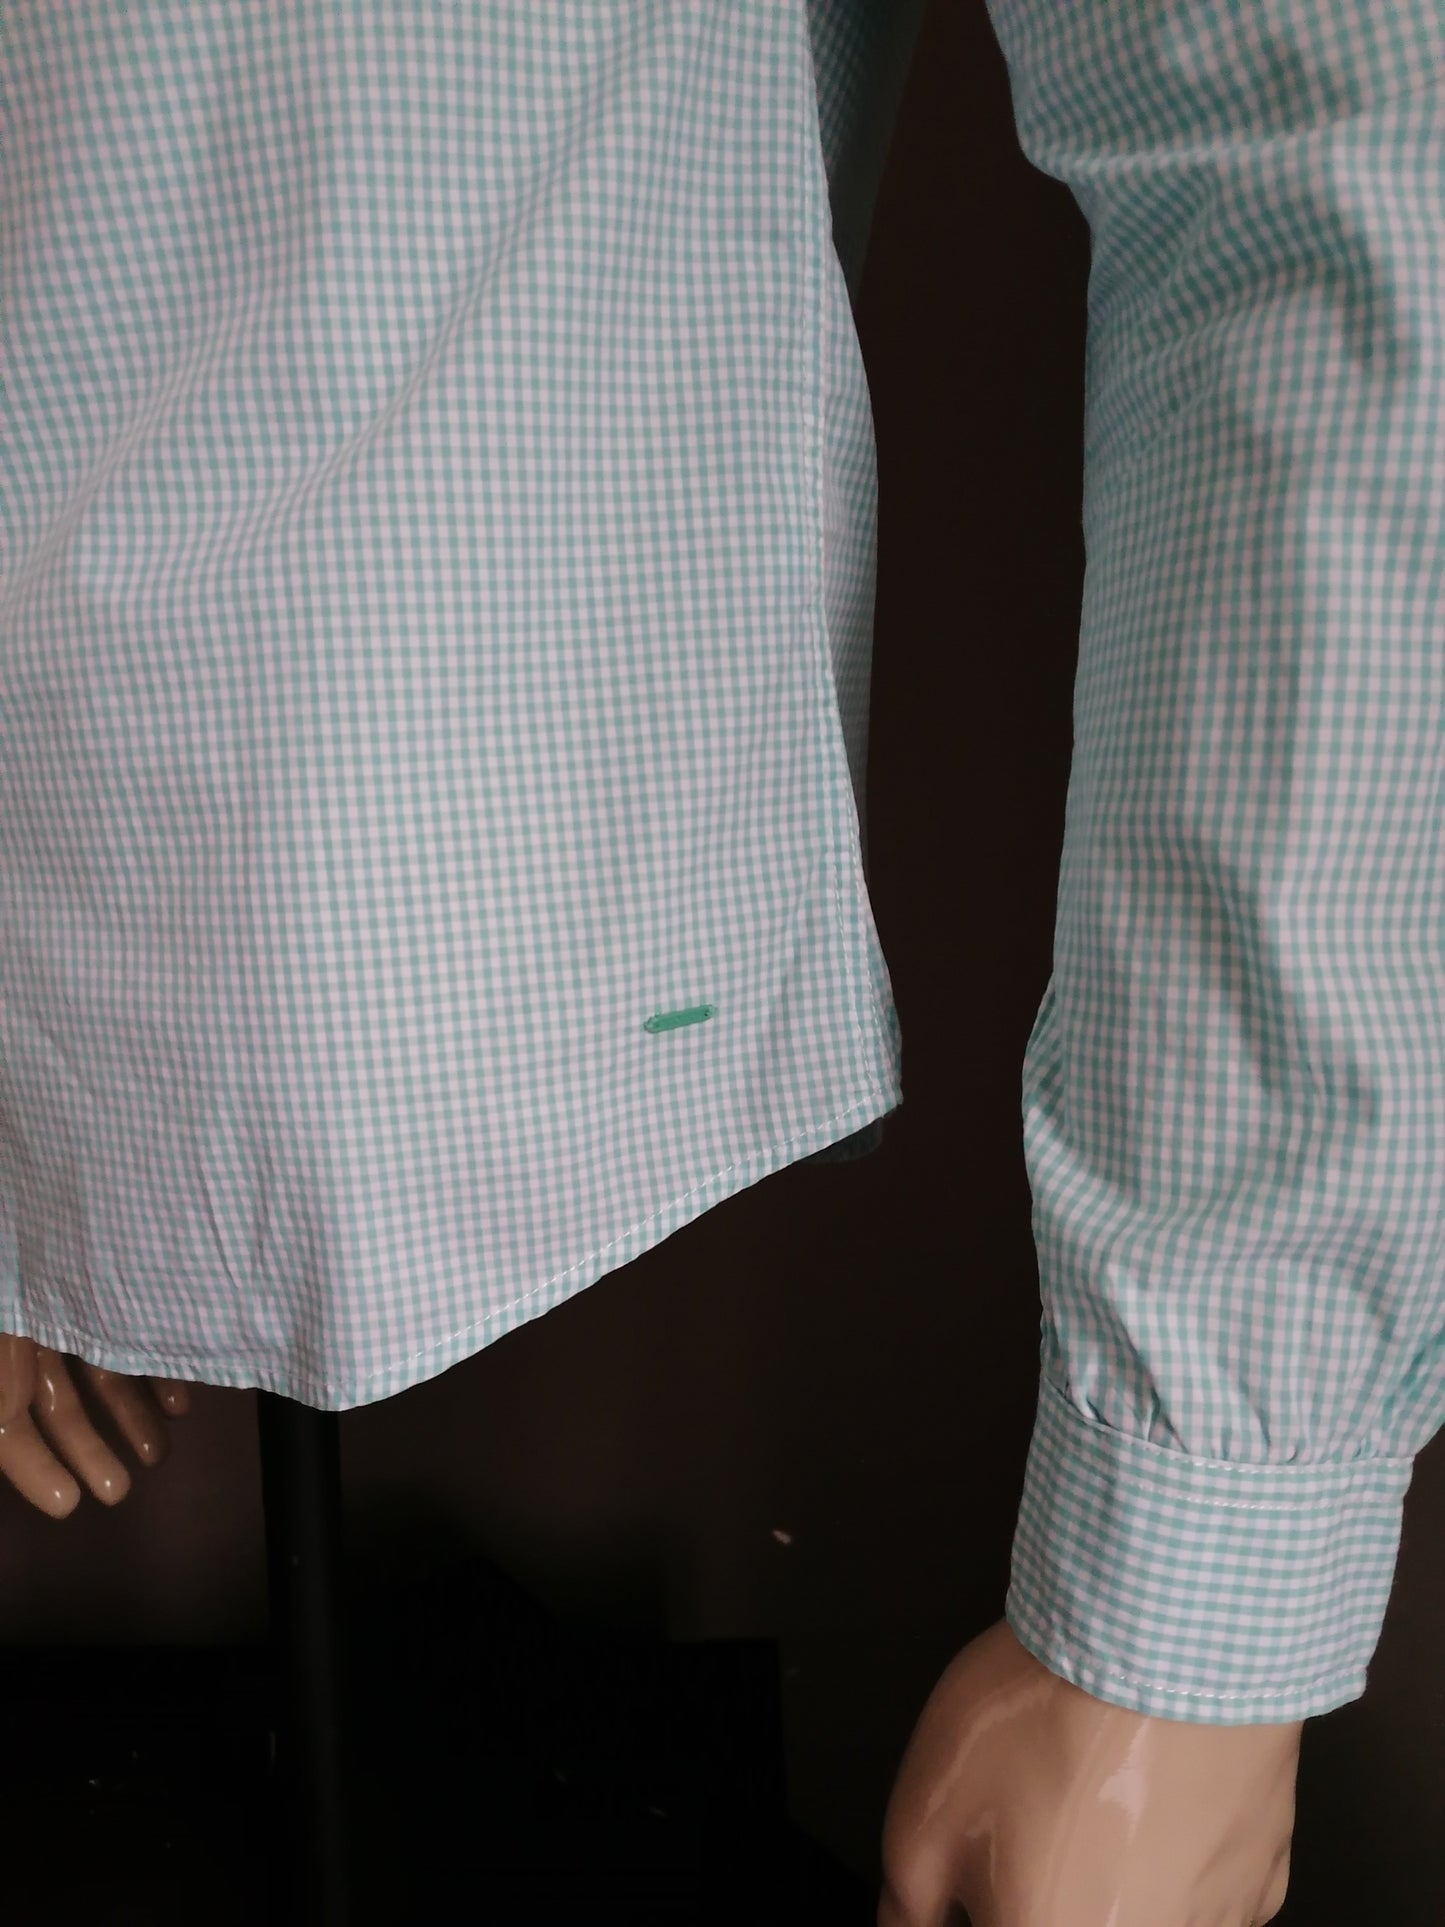 Camisa Scotch & Soda. Blanco verde a cuadros. Tamaño S.